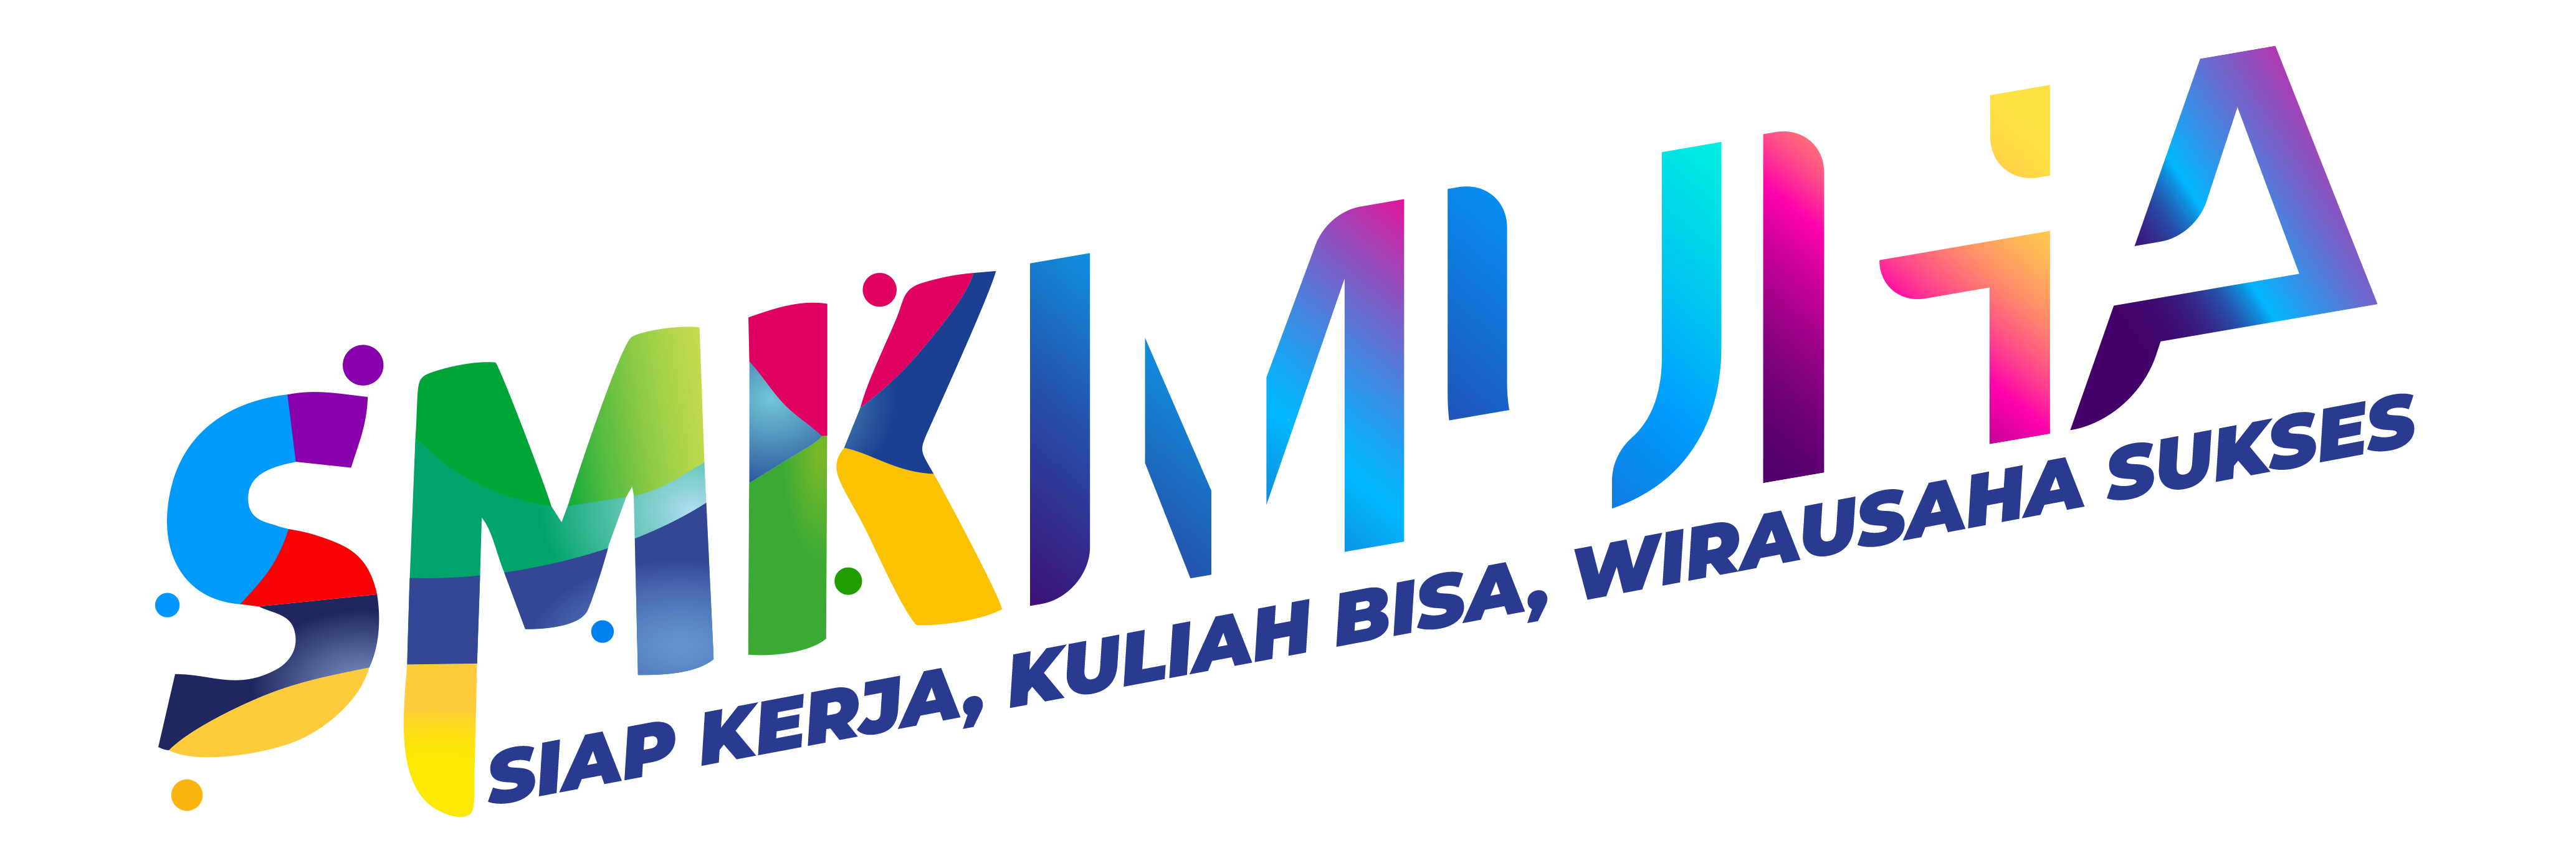 Prestasi Siswa | SMK Muhammadiyah 4 Jakarta